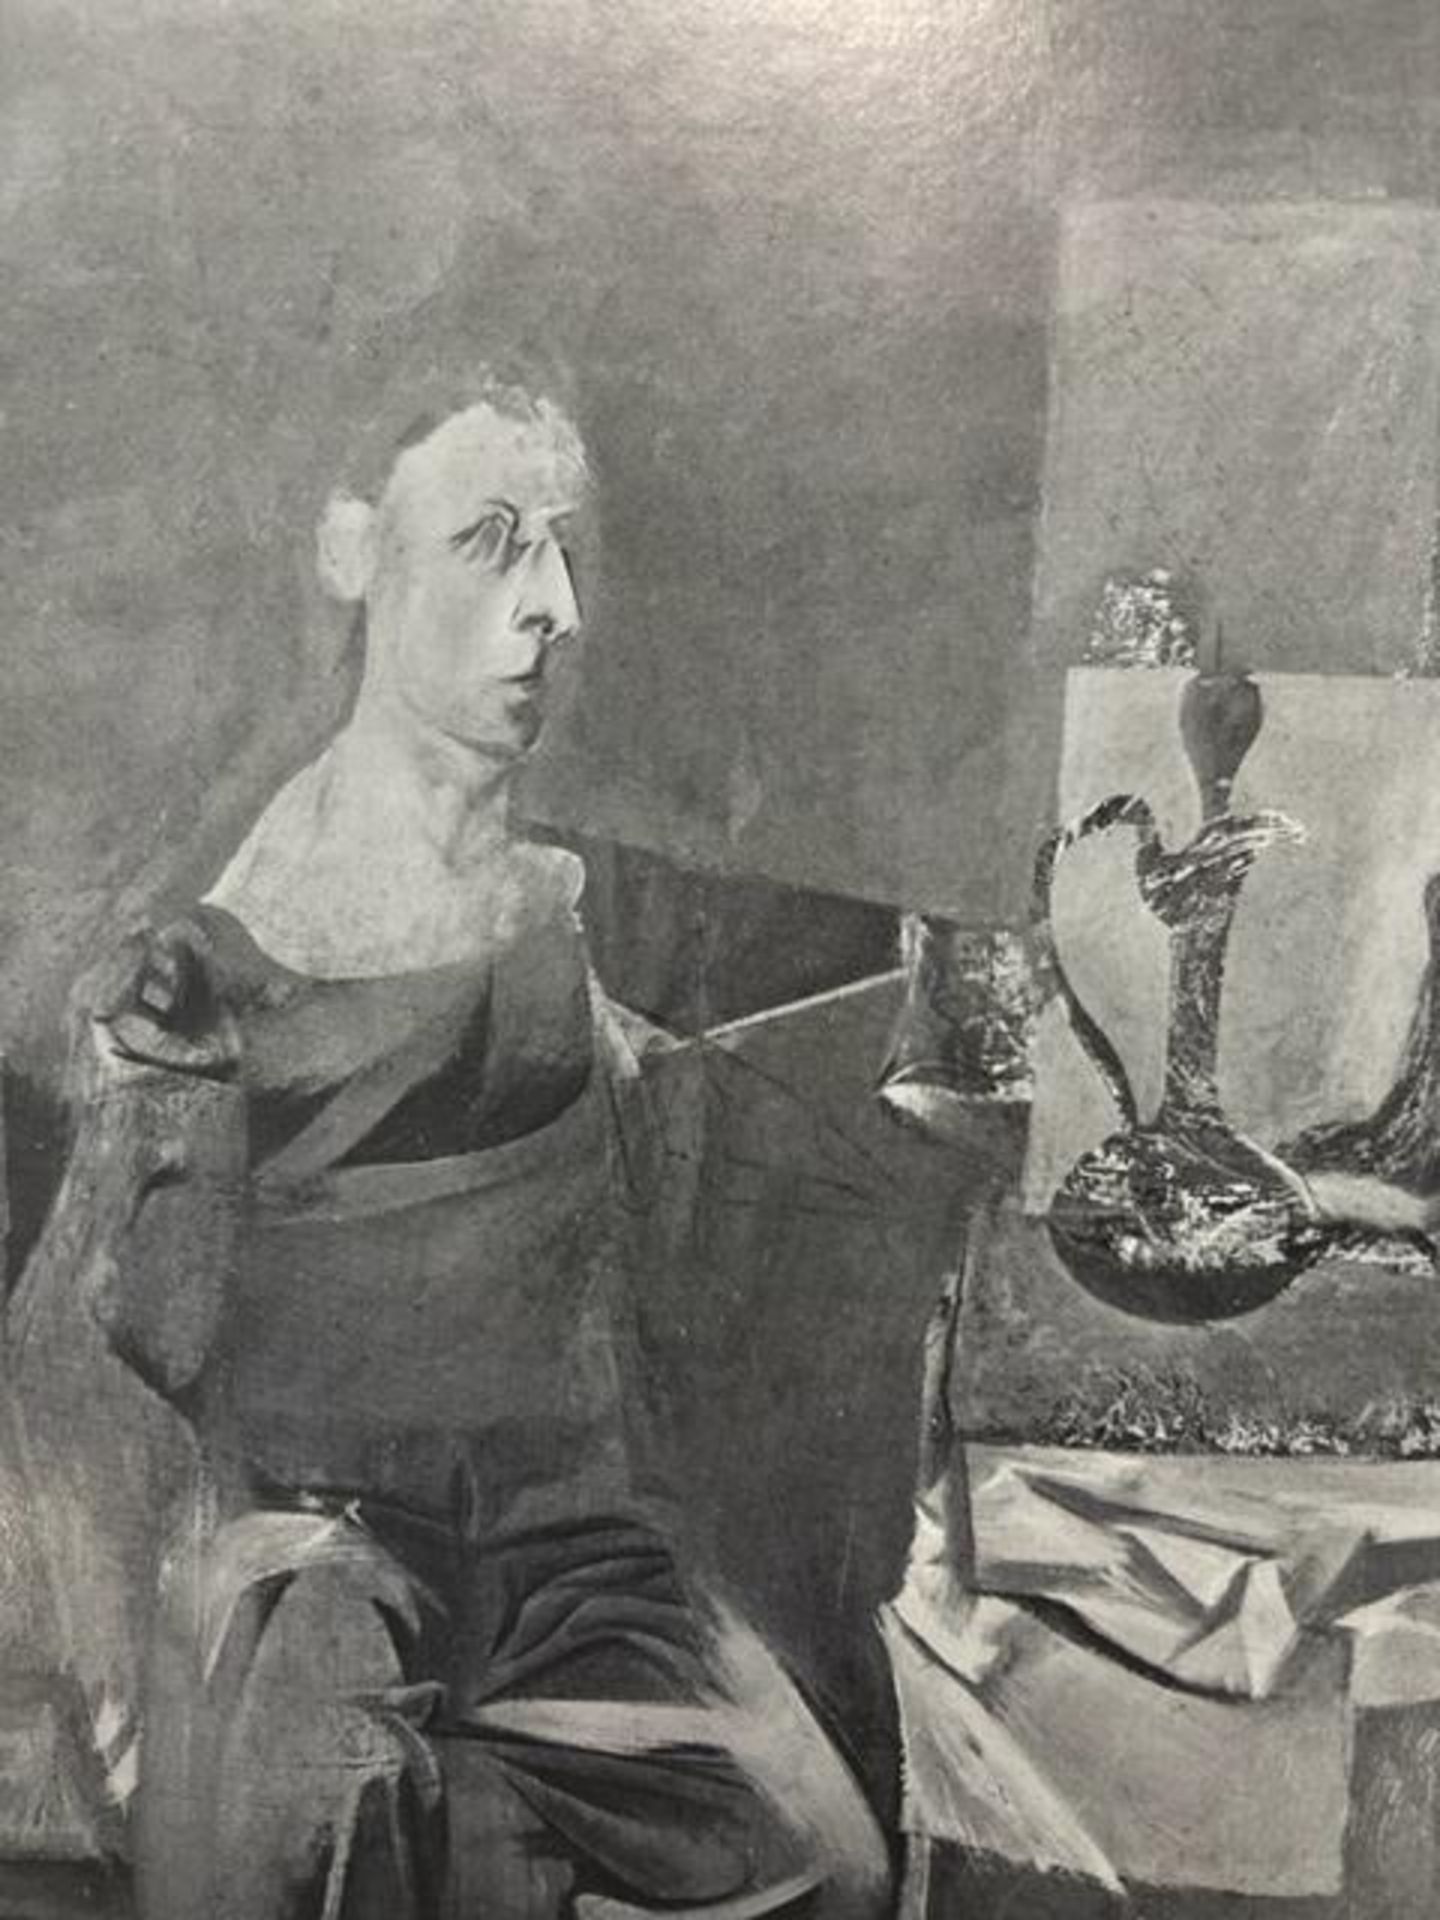 Willem de Kooning "Glazier" Print. - Bild 2 aus 6